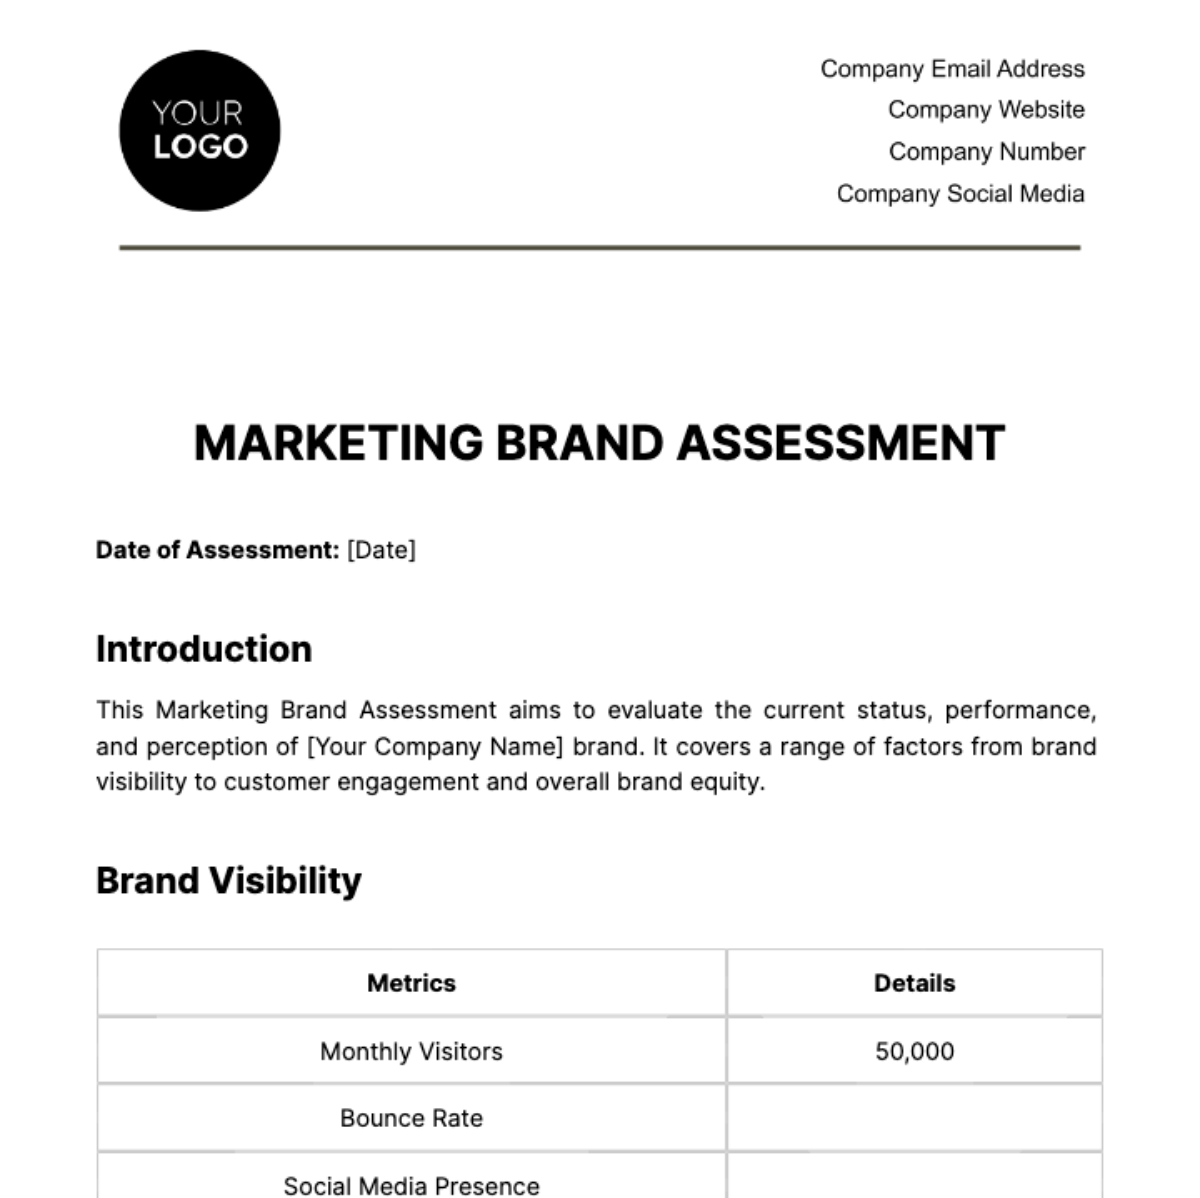 Marketing Brand Assessment Template